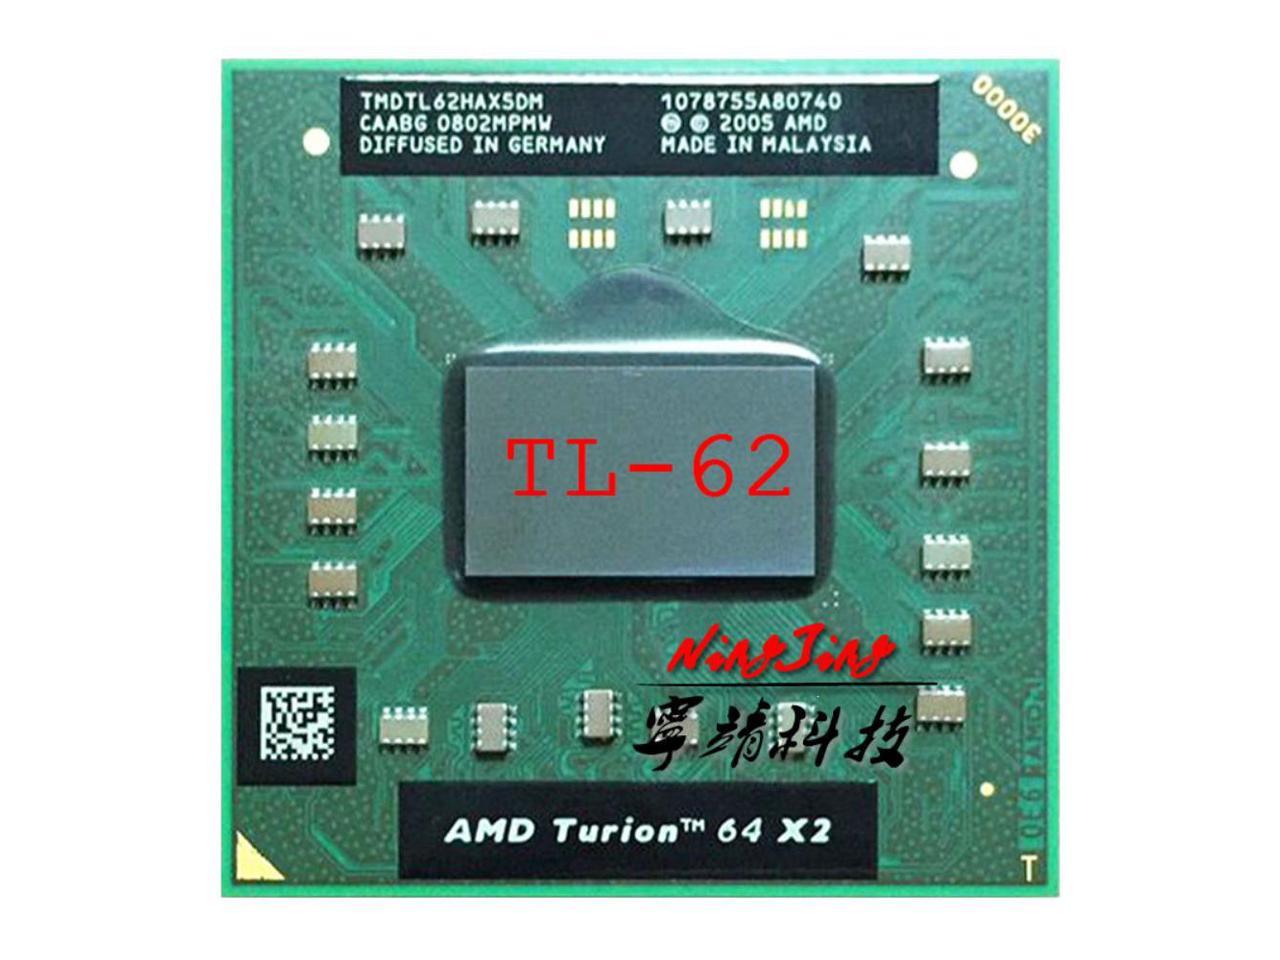 AMD Turion 64 X2 Dual Core TL-62 Mobile CPU 2.1GHz TMDTL62HAX5DM